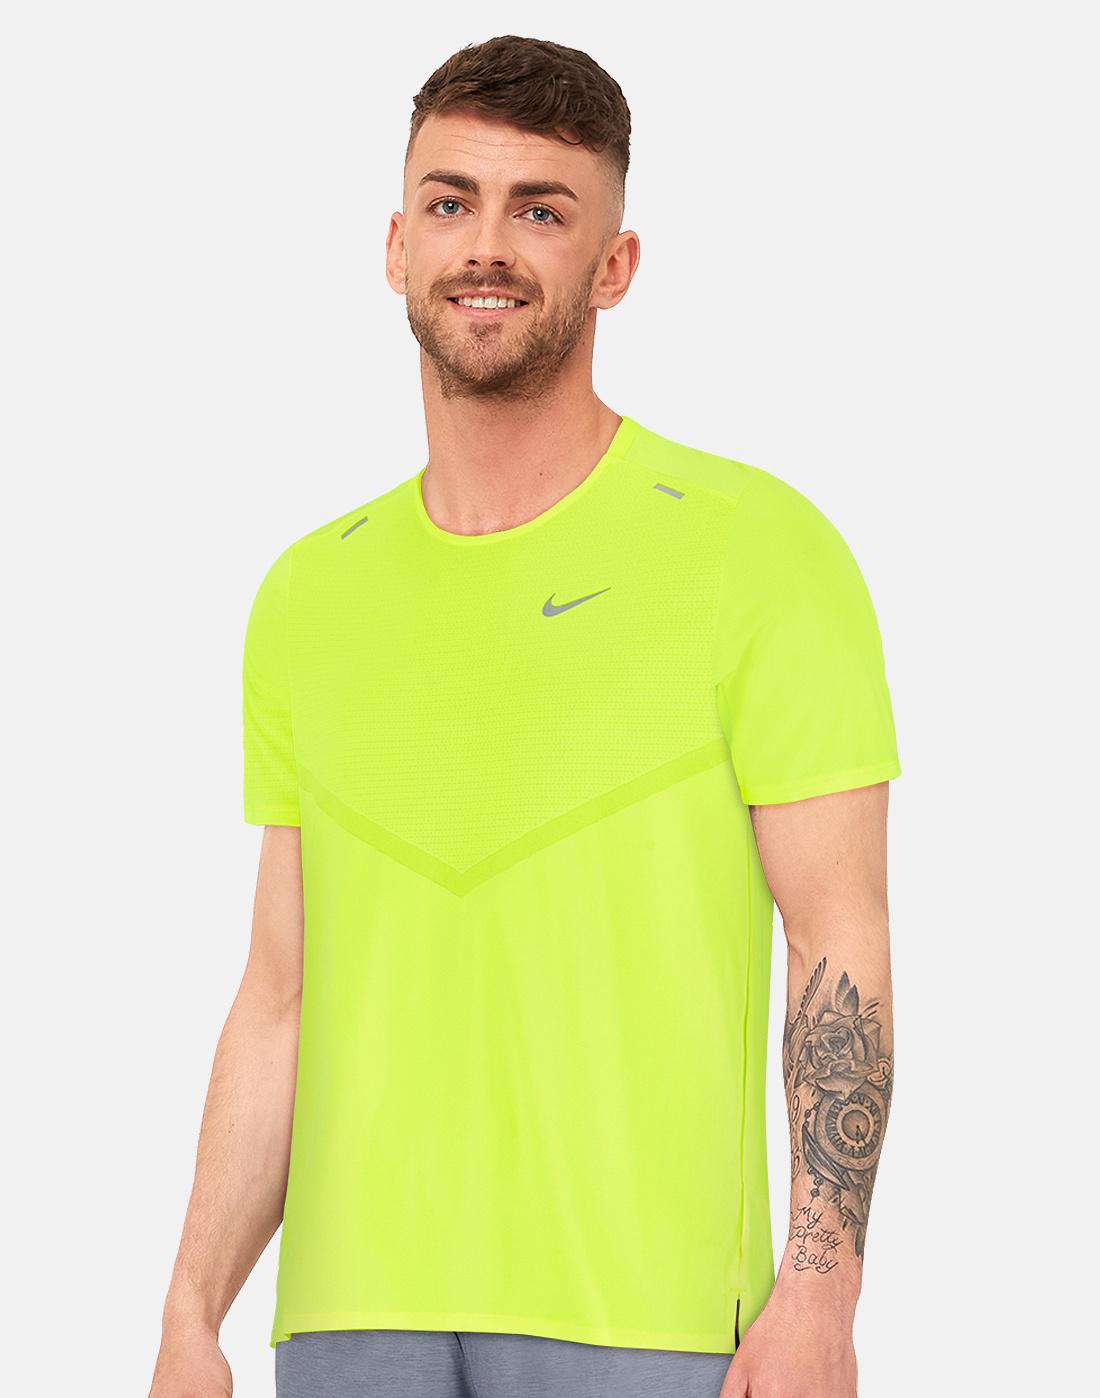 Nike Mens Rise 365 T-Shirt - Green | Life Style Sports UK